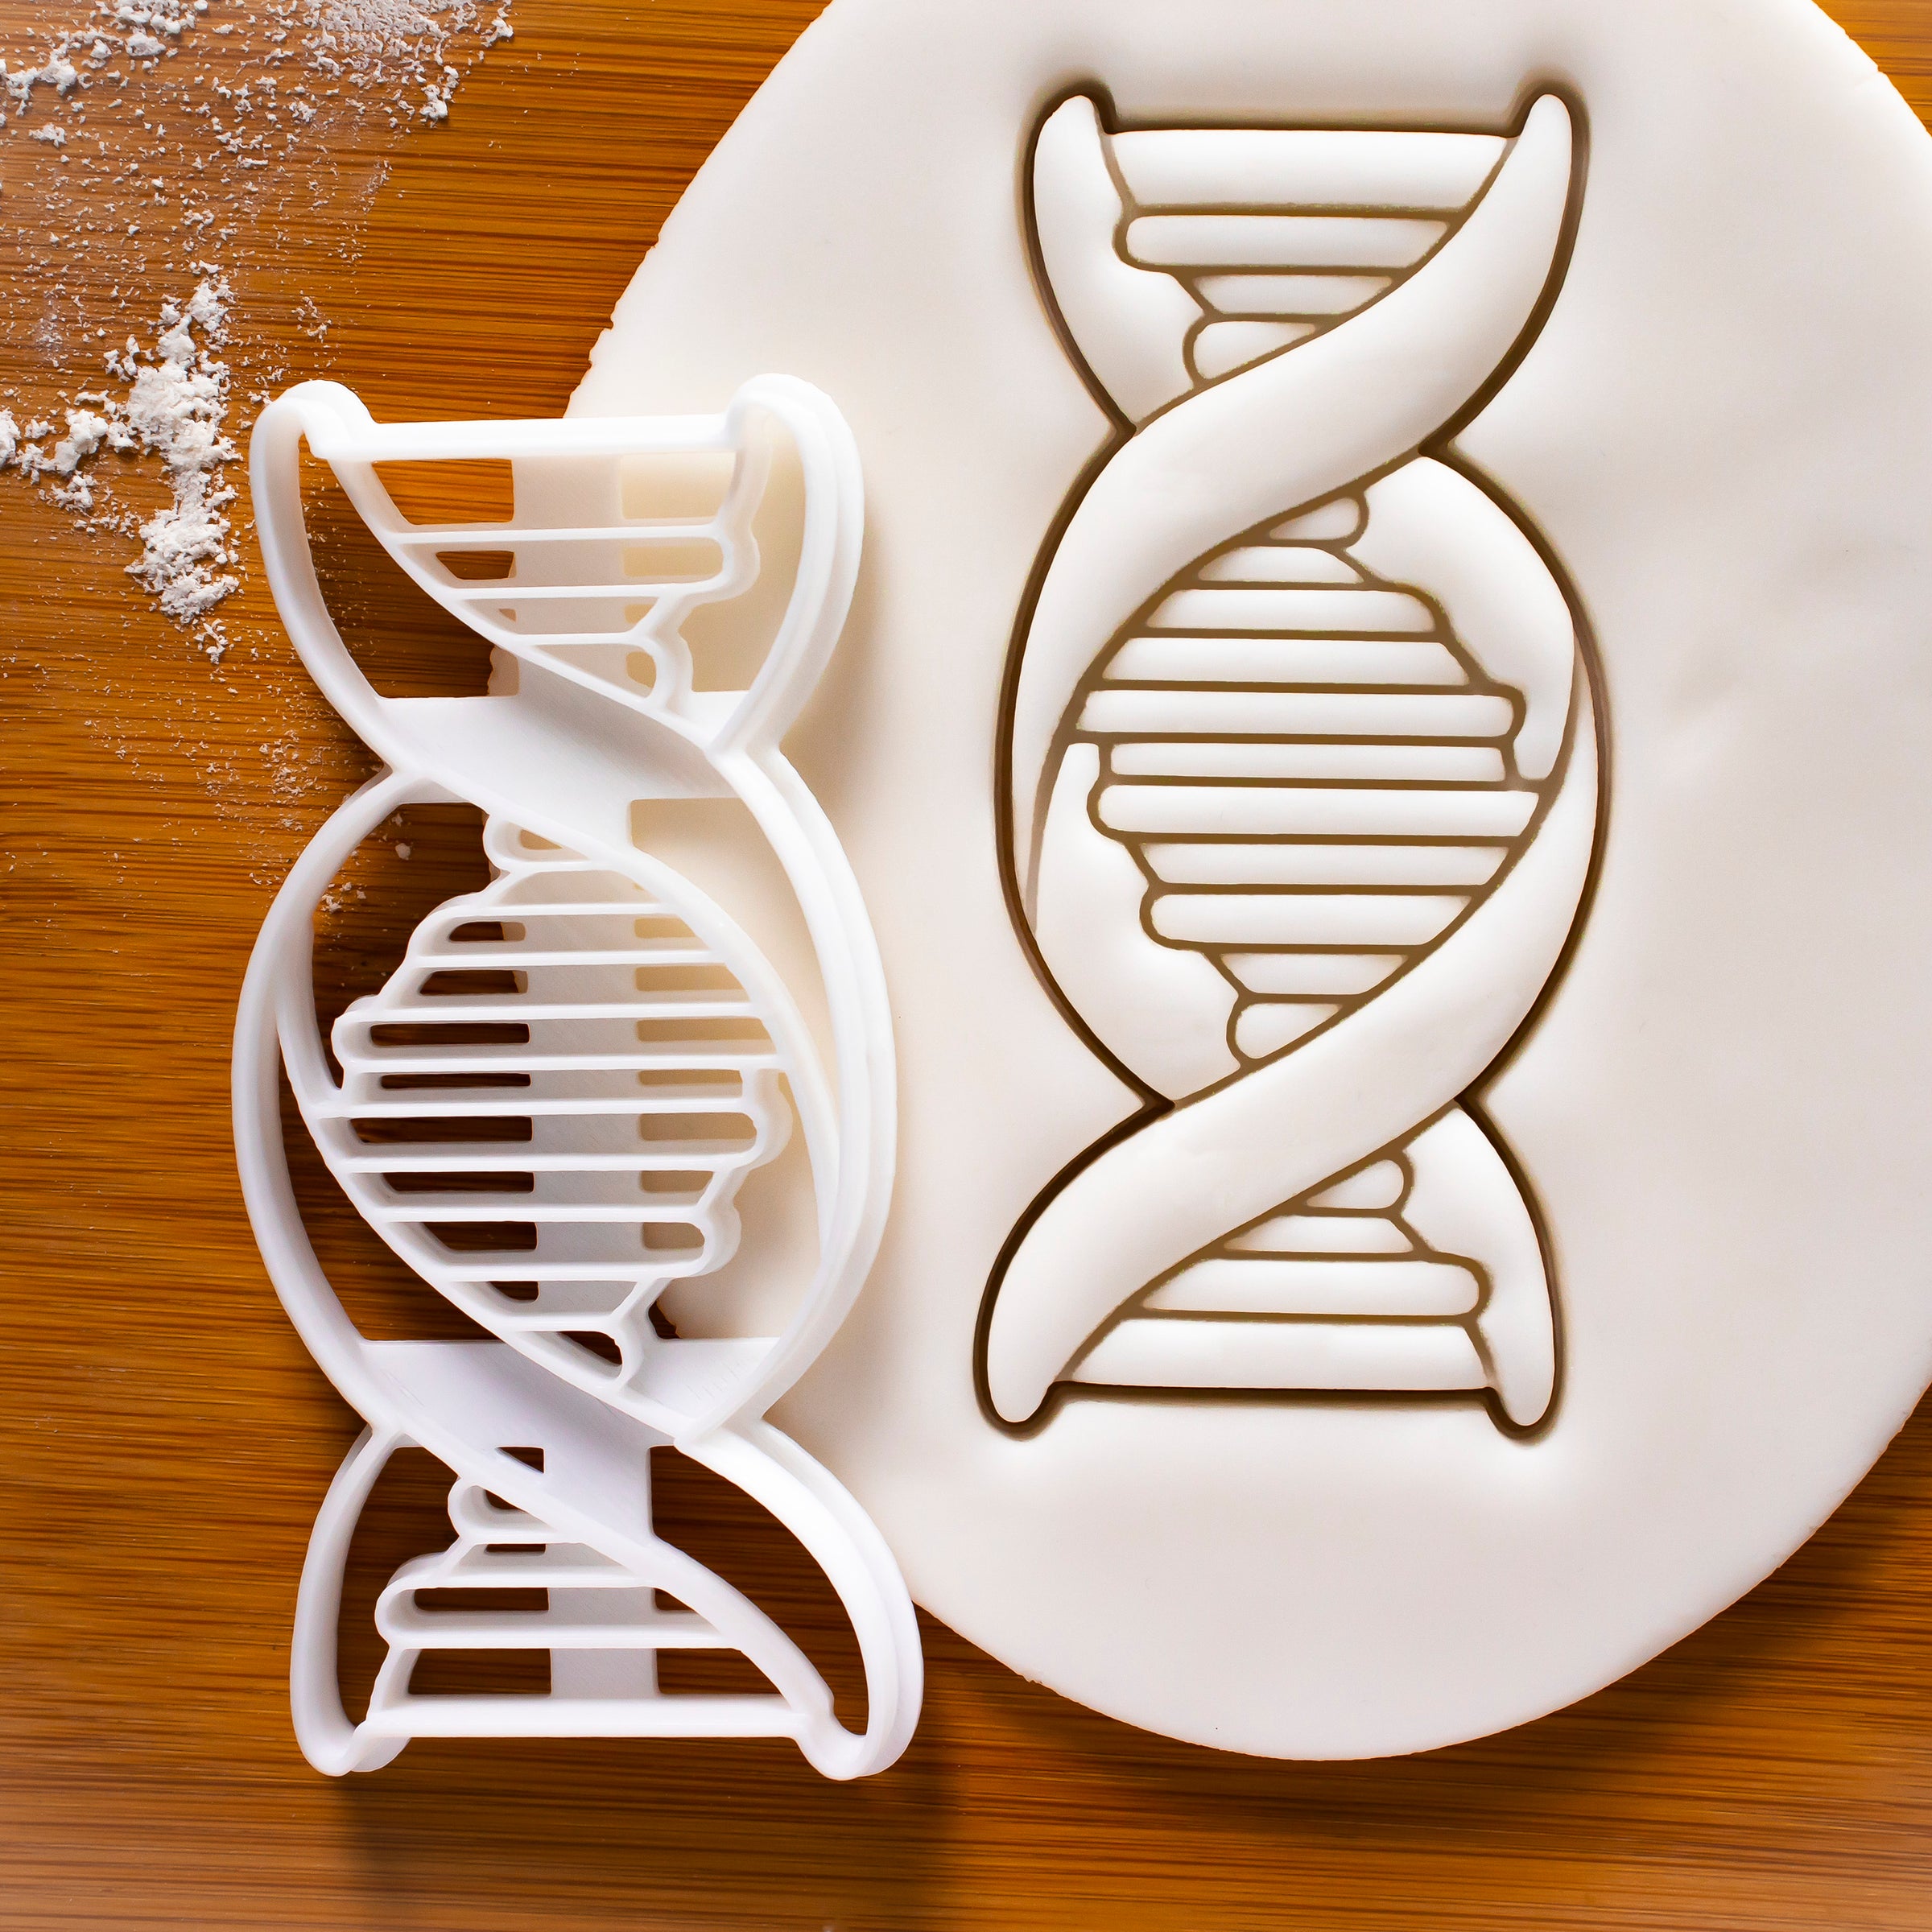 DNA cookie cutter